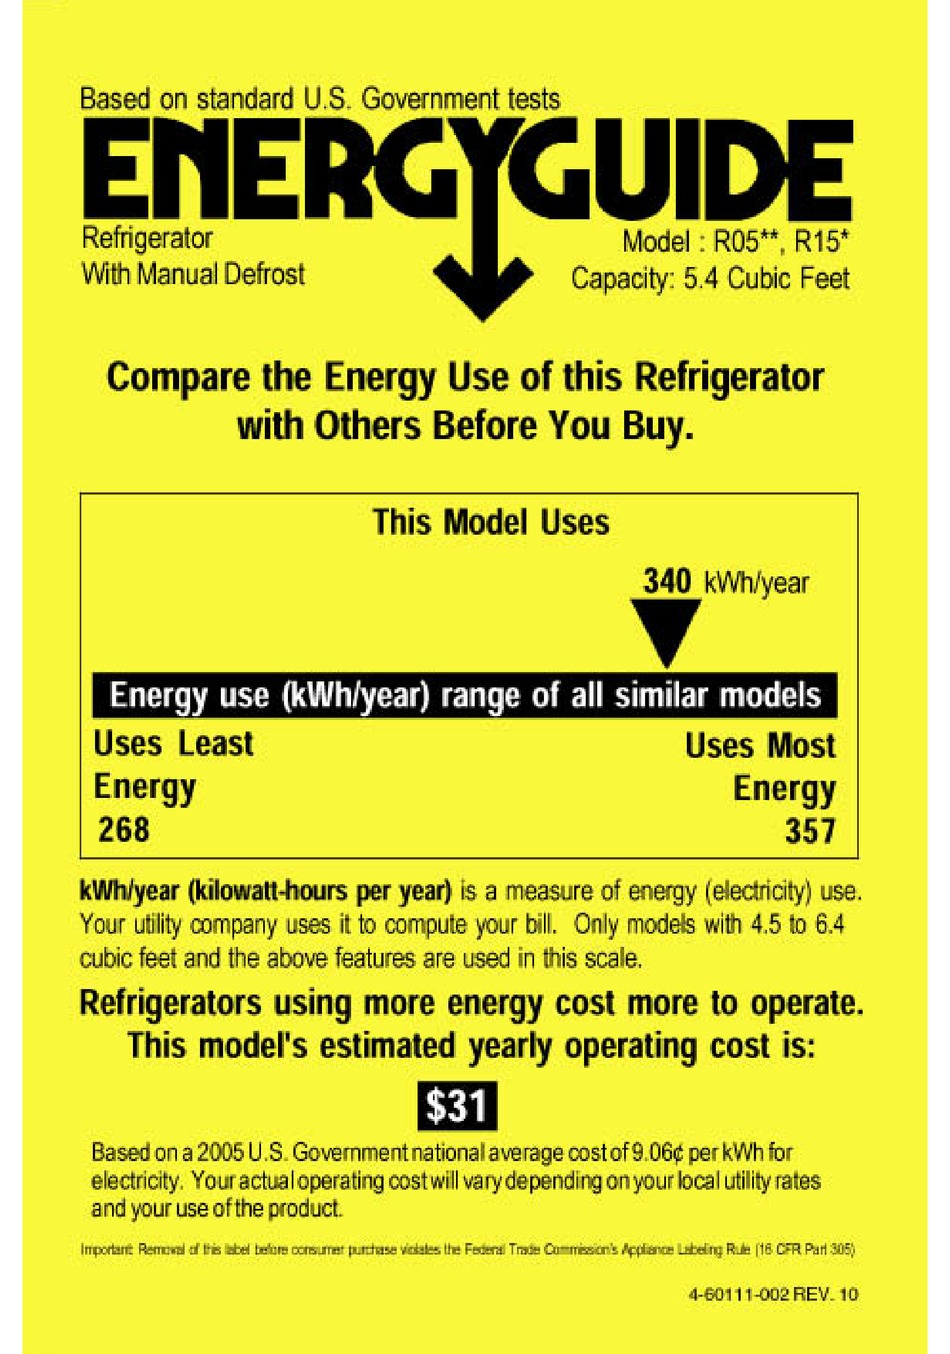 energy efficiency manual wulfinghoff pdf to word